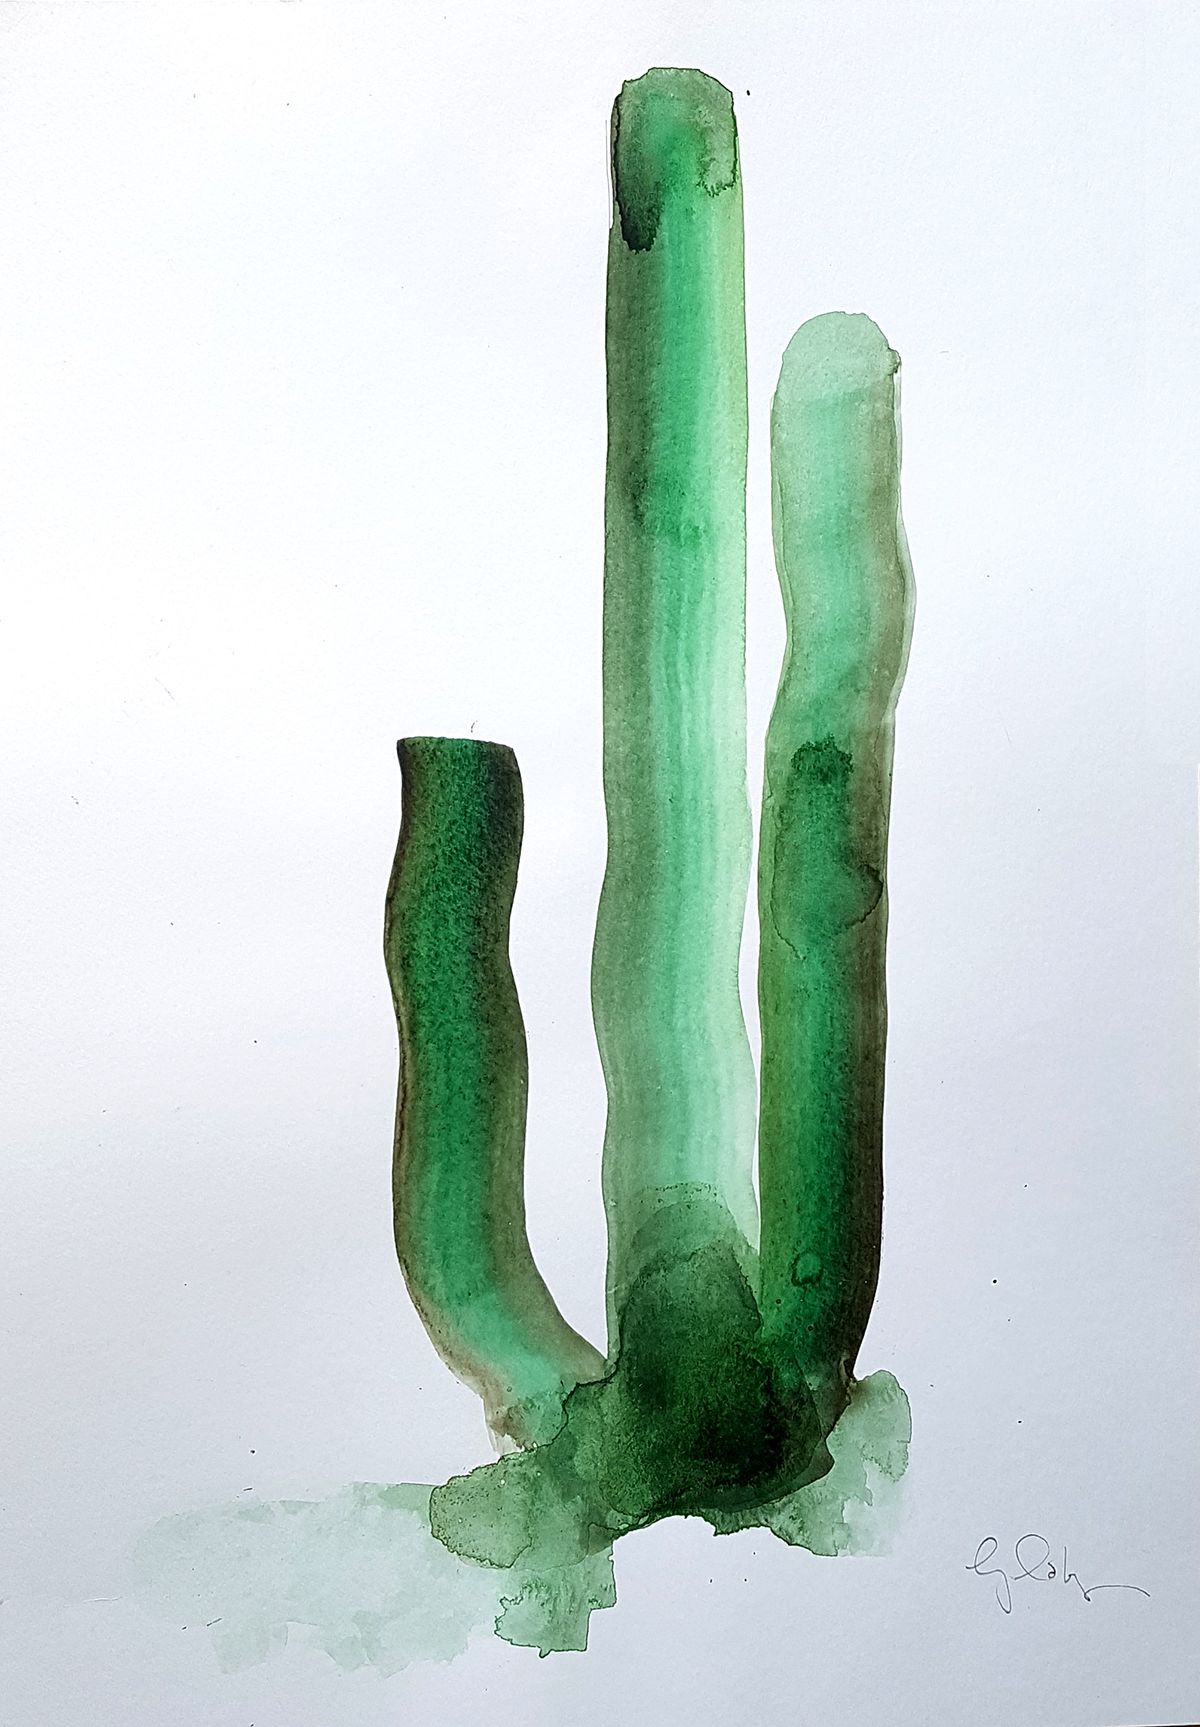 Cactus by Gavin Dobson